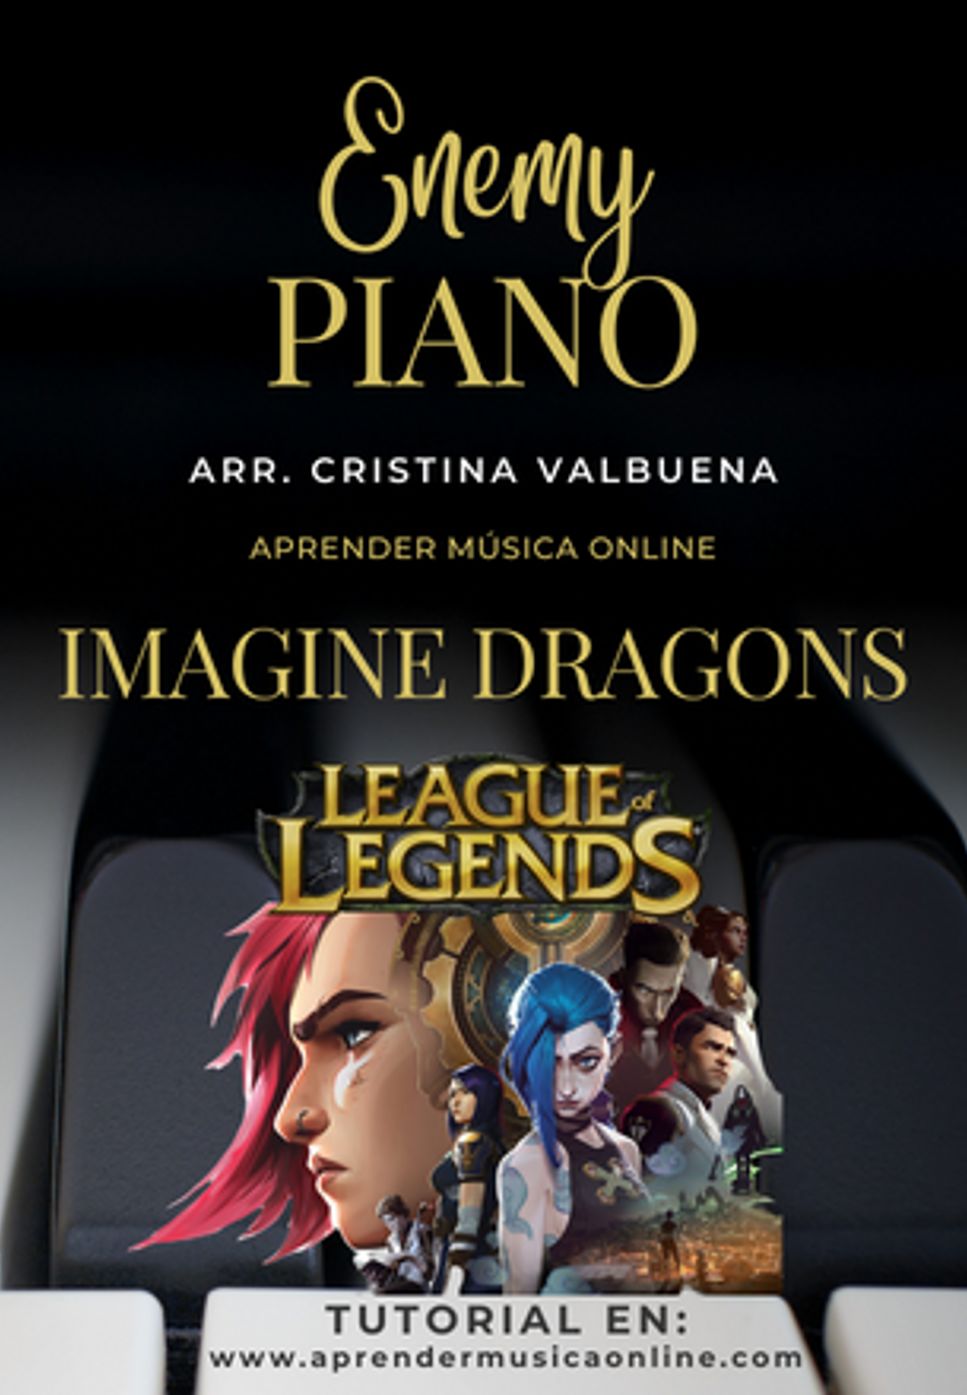 Imagine Dragons - Enemy by Cristina Valbuena